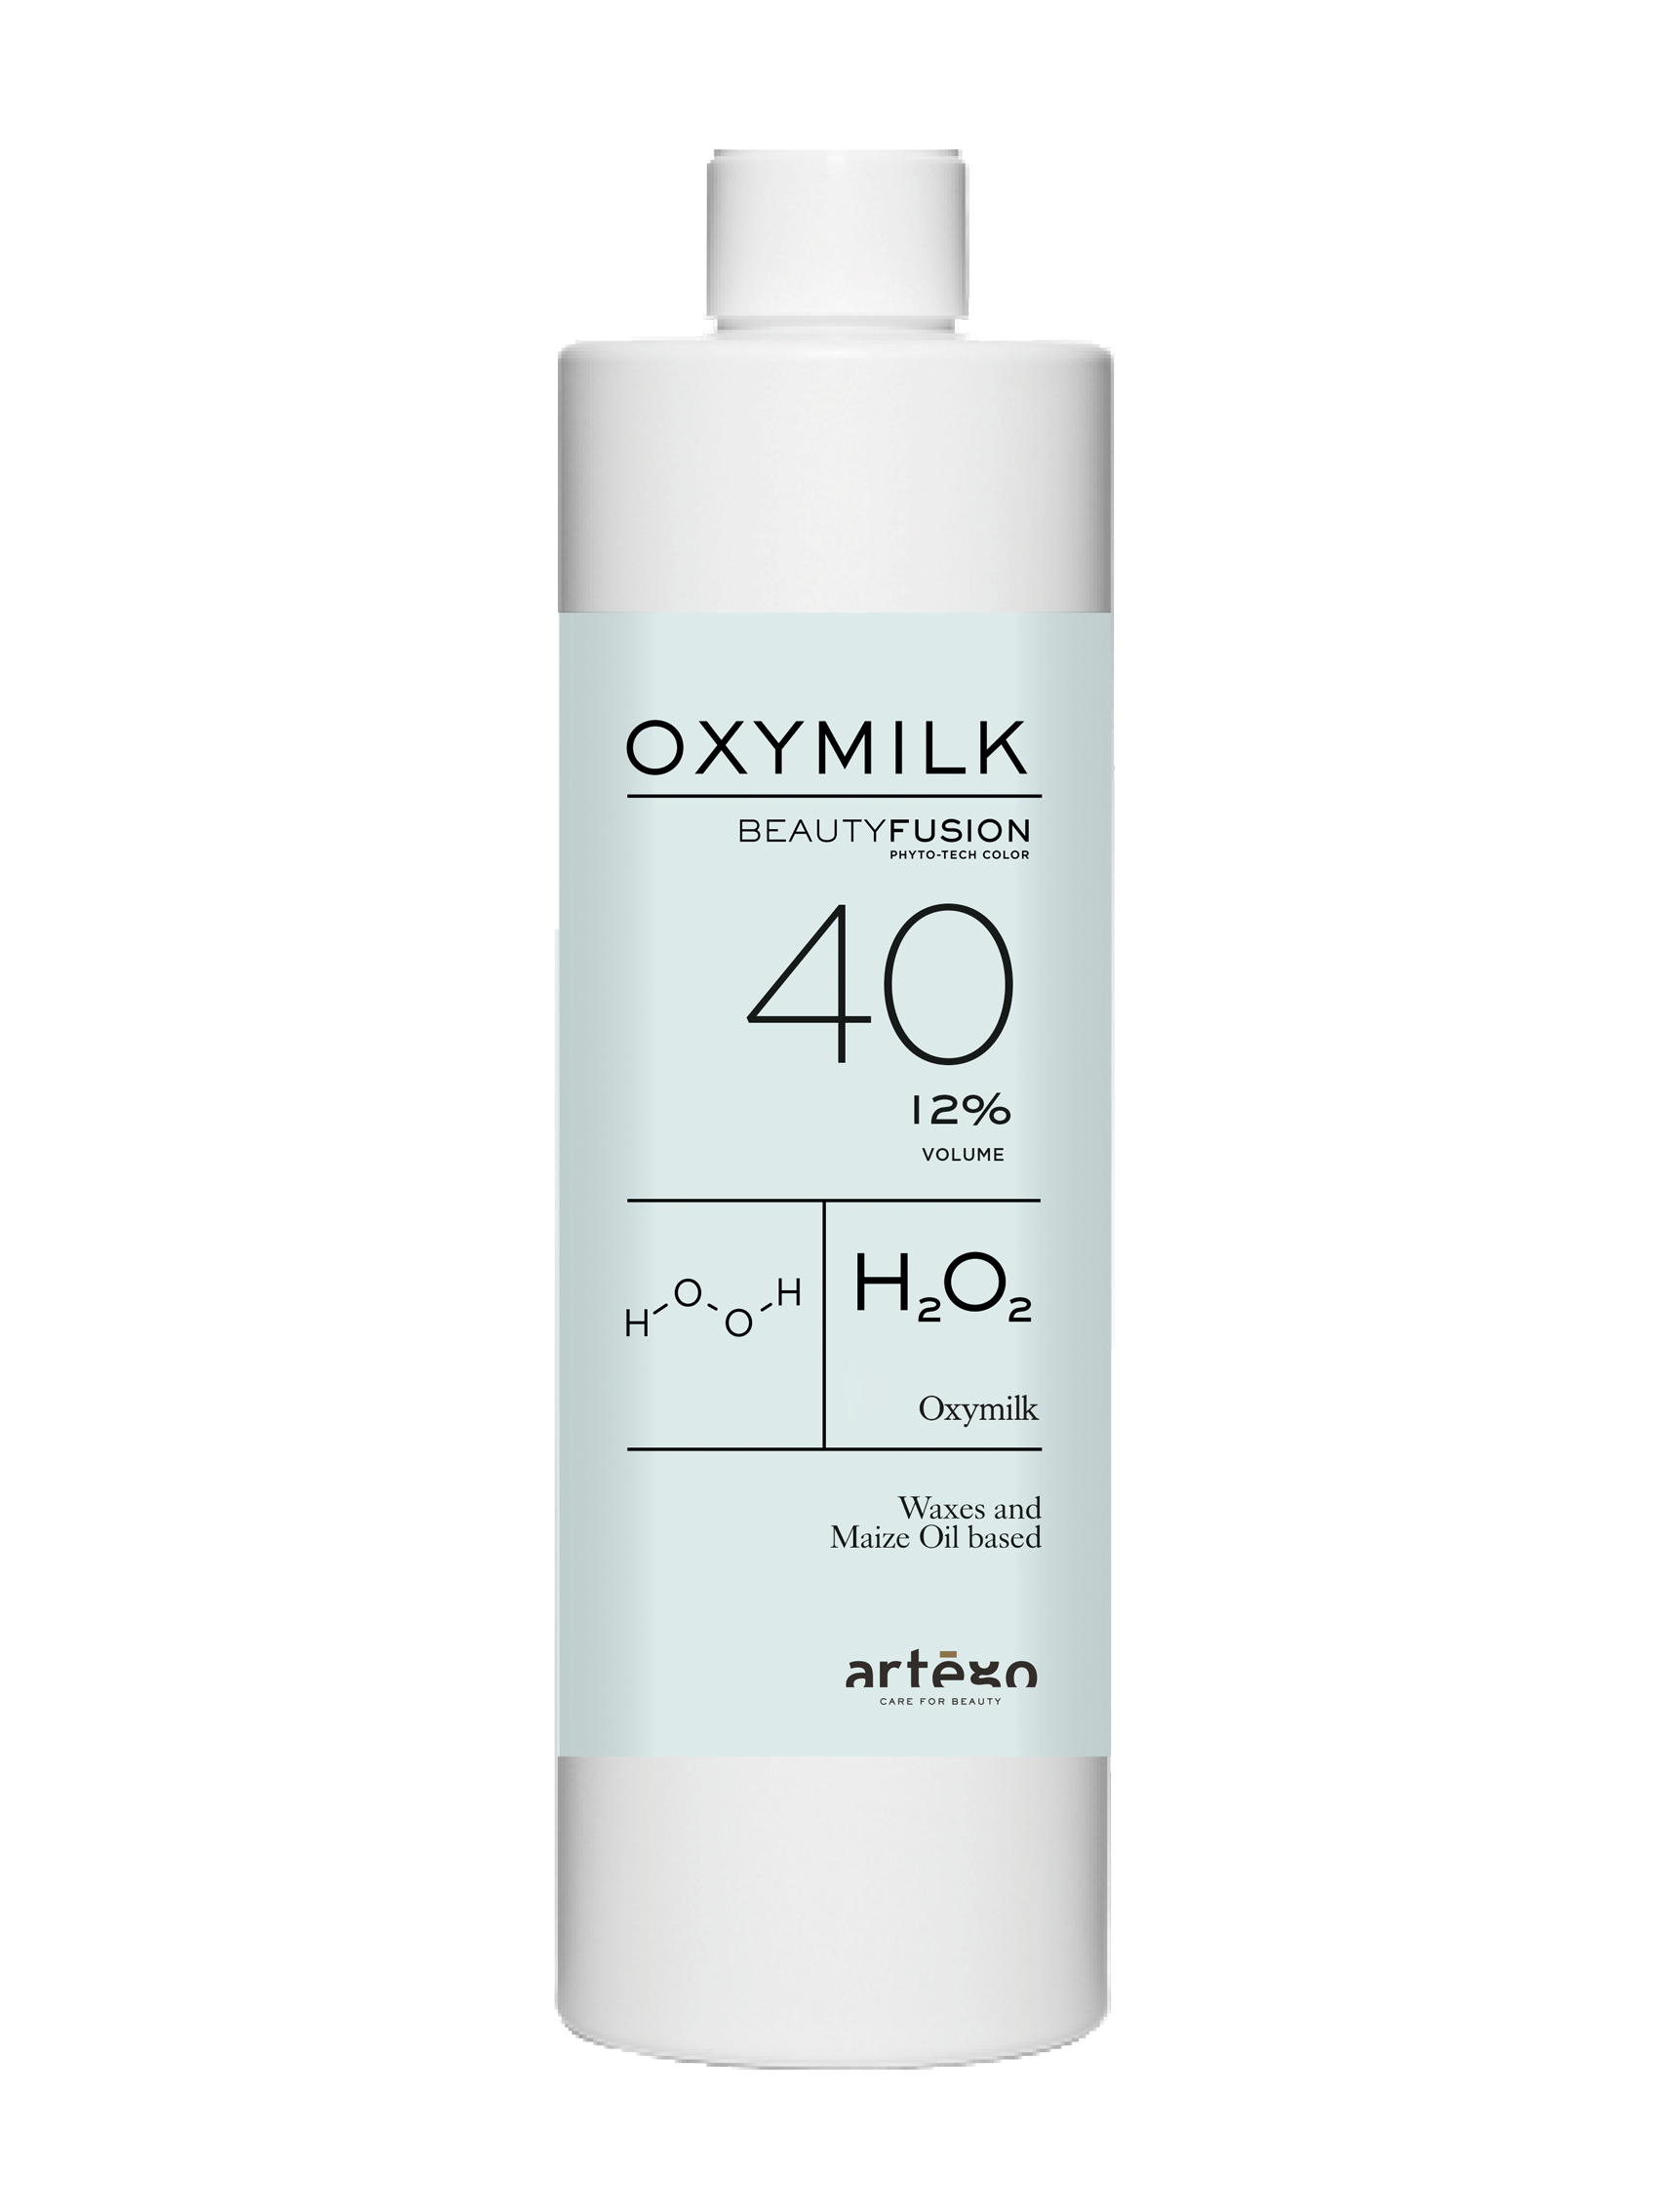 Oxymilk-40-vol-12-Beauty-Fusion